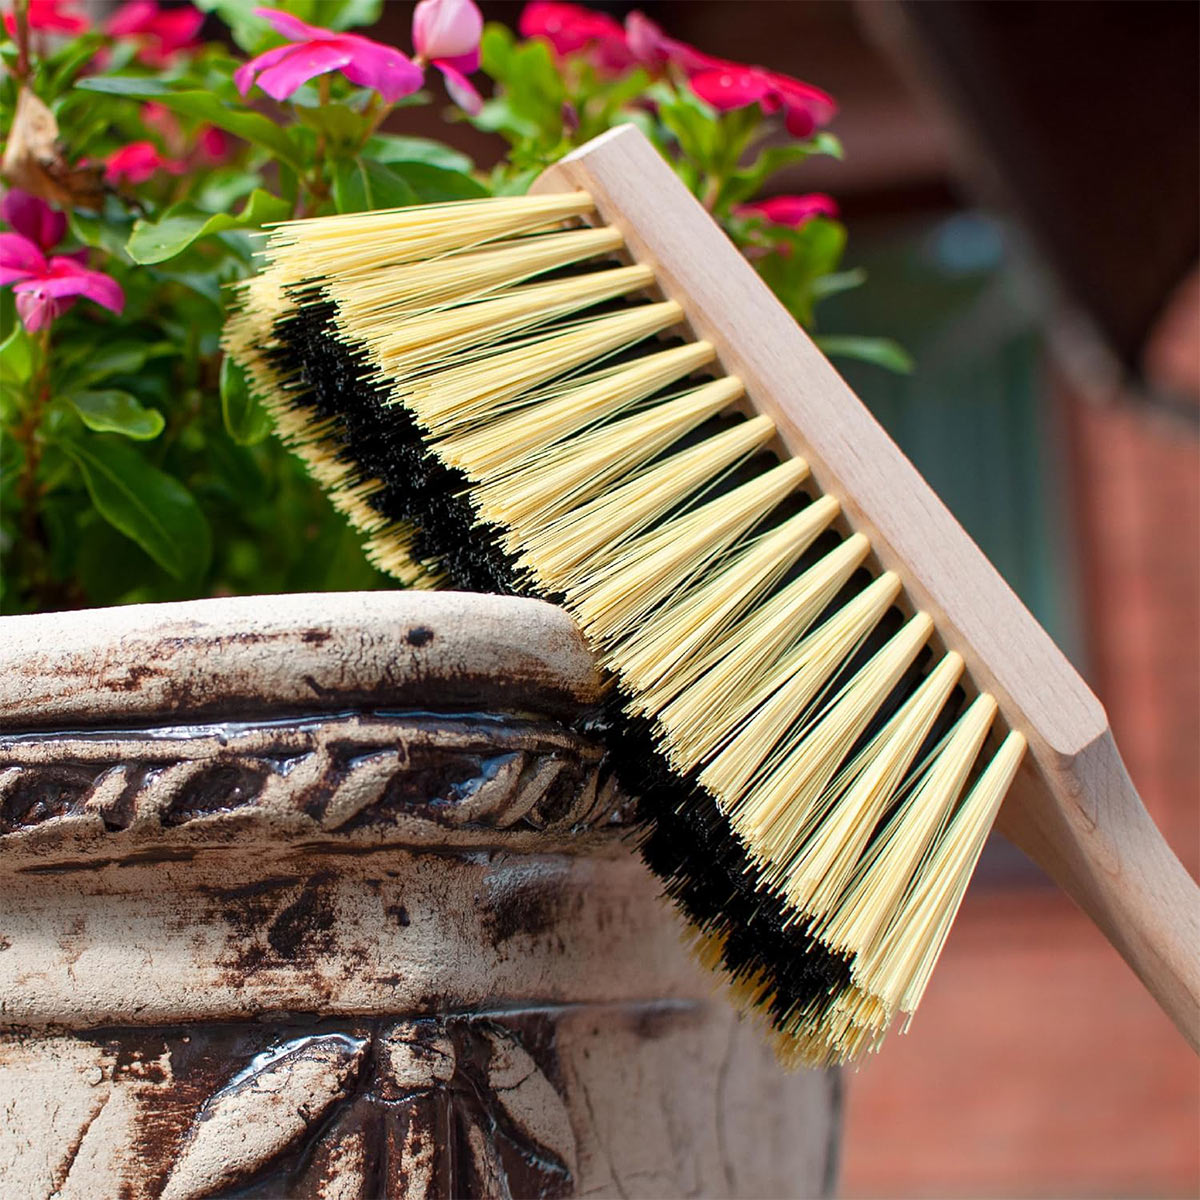 14.2" Hand Broom Medium-Soft Bristles Cleaning Brush - Dusting Brush